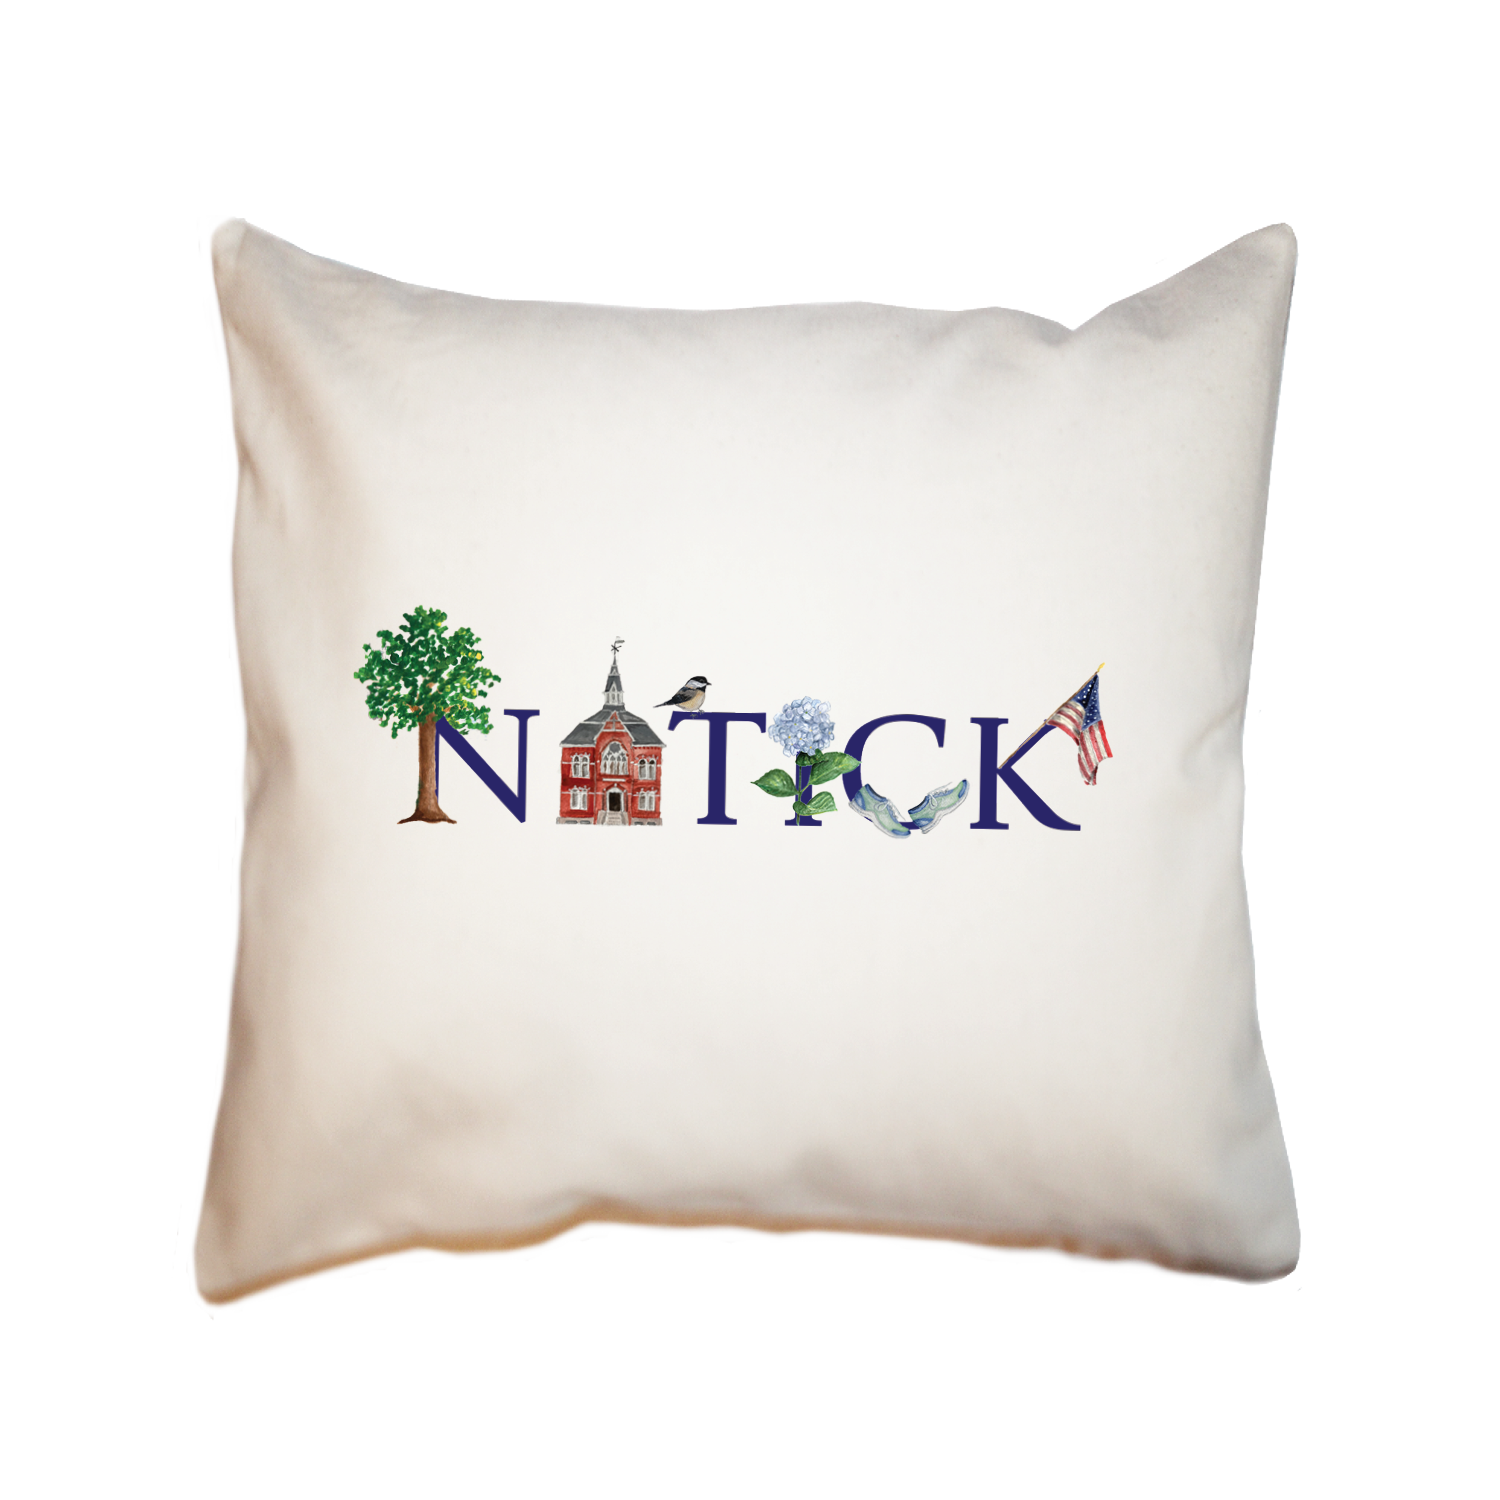 natick square pillow